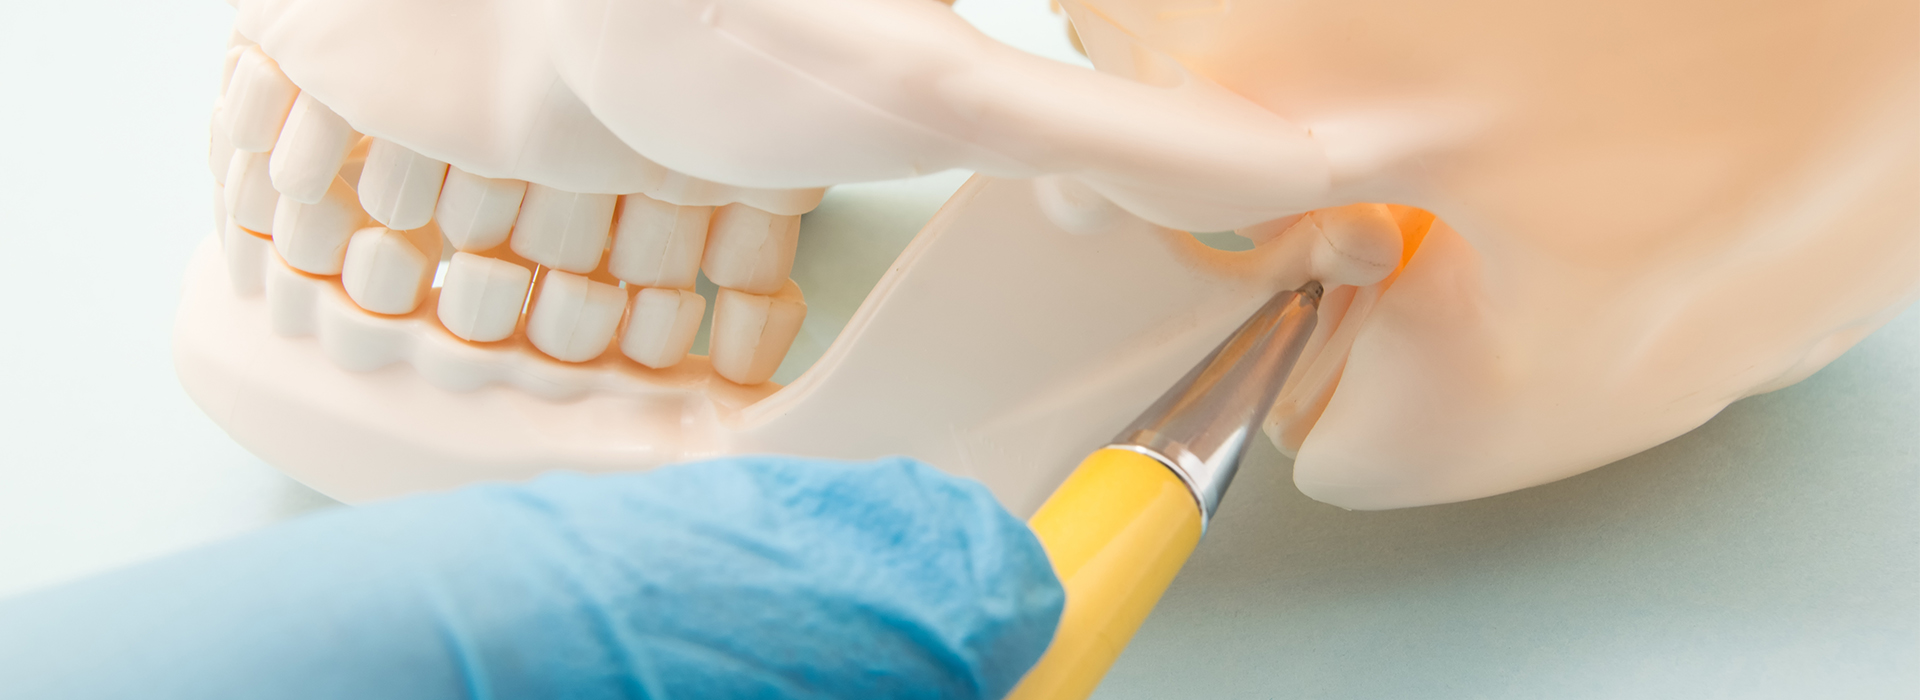 Norwalk Dental Center | Dental Bridges, Implant Dentistry and Night Guards